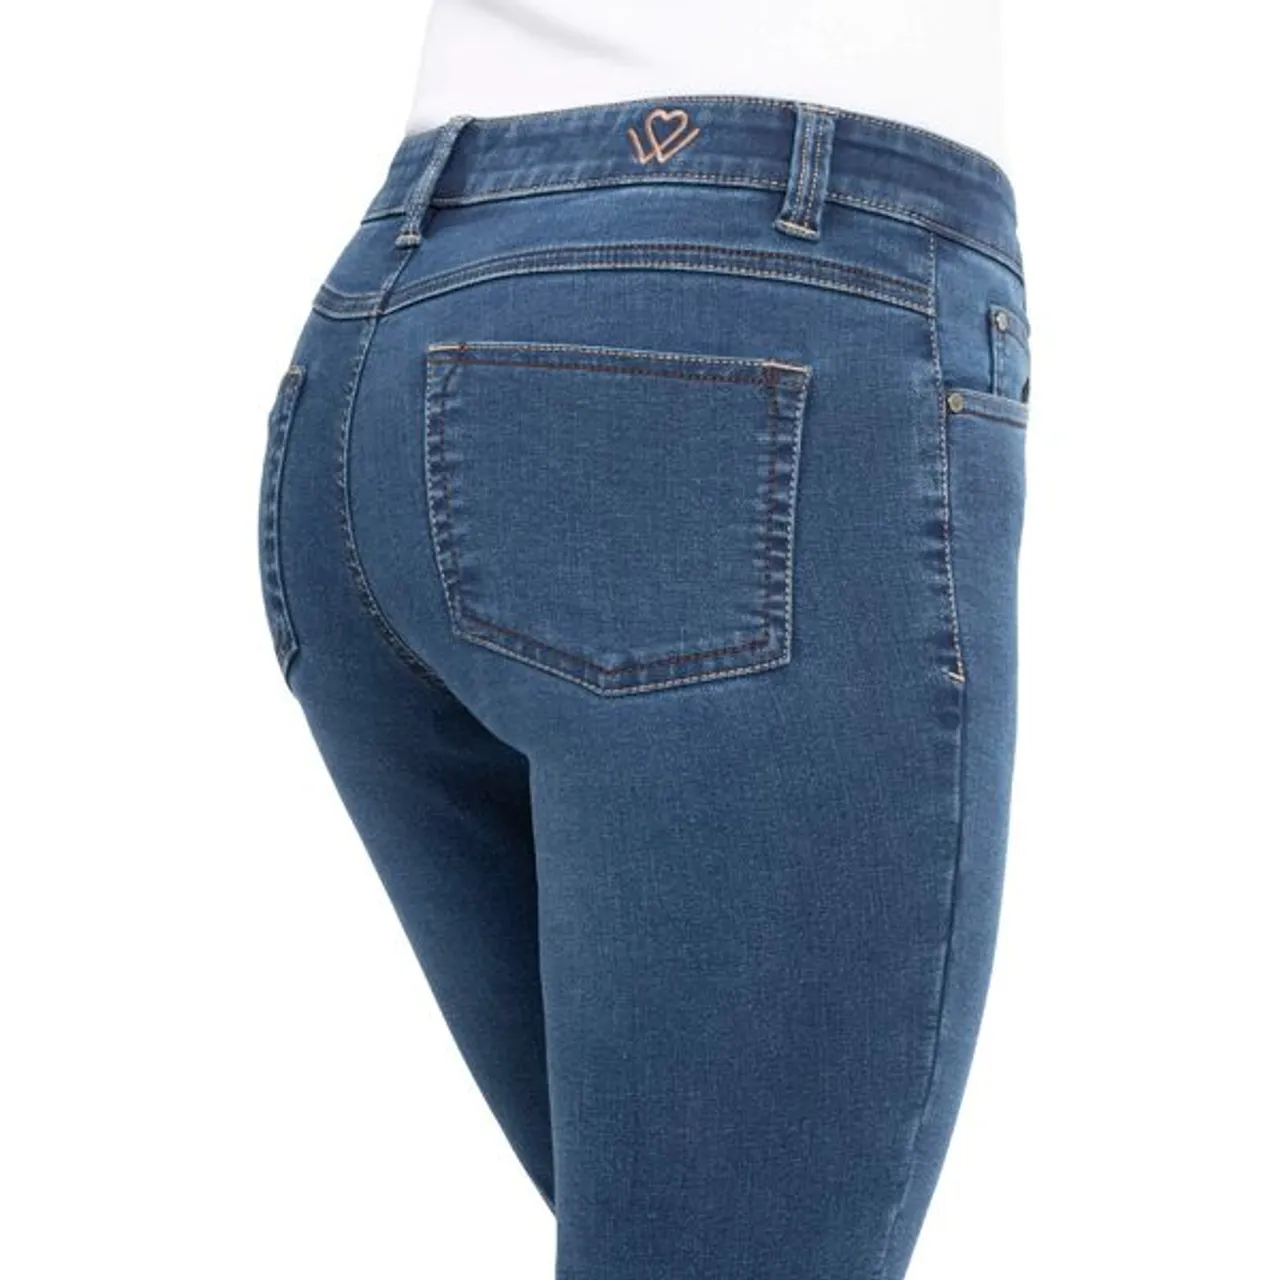 Skinny-fit-Jeans WONDERJEANS "Skinny-WS76-80" Gr. 40, Länge 32, blau (blue super wash) Damen Jeans Röhrenjeans Schmaler Skinny-Fit in hochelastischer...